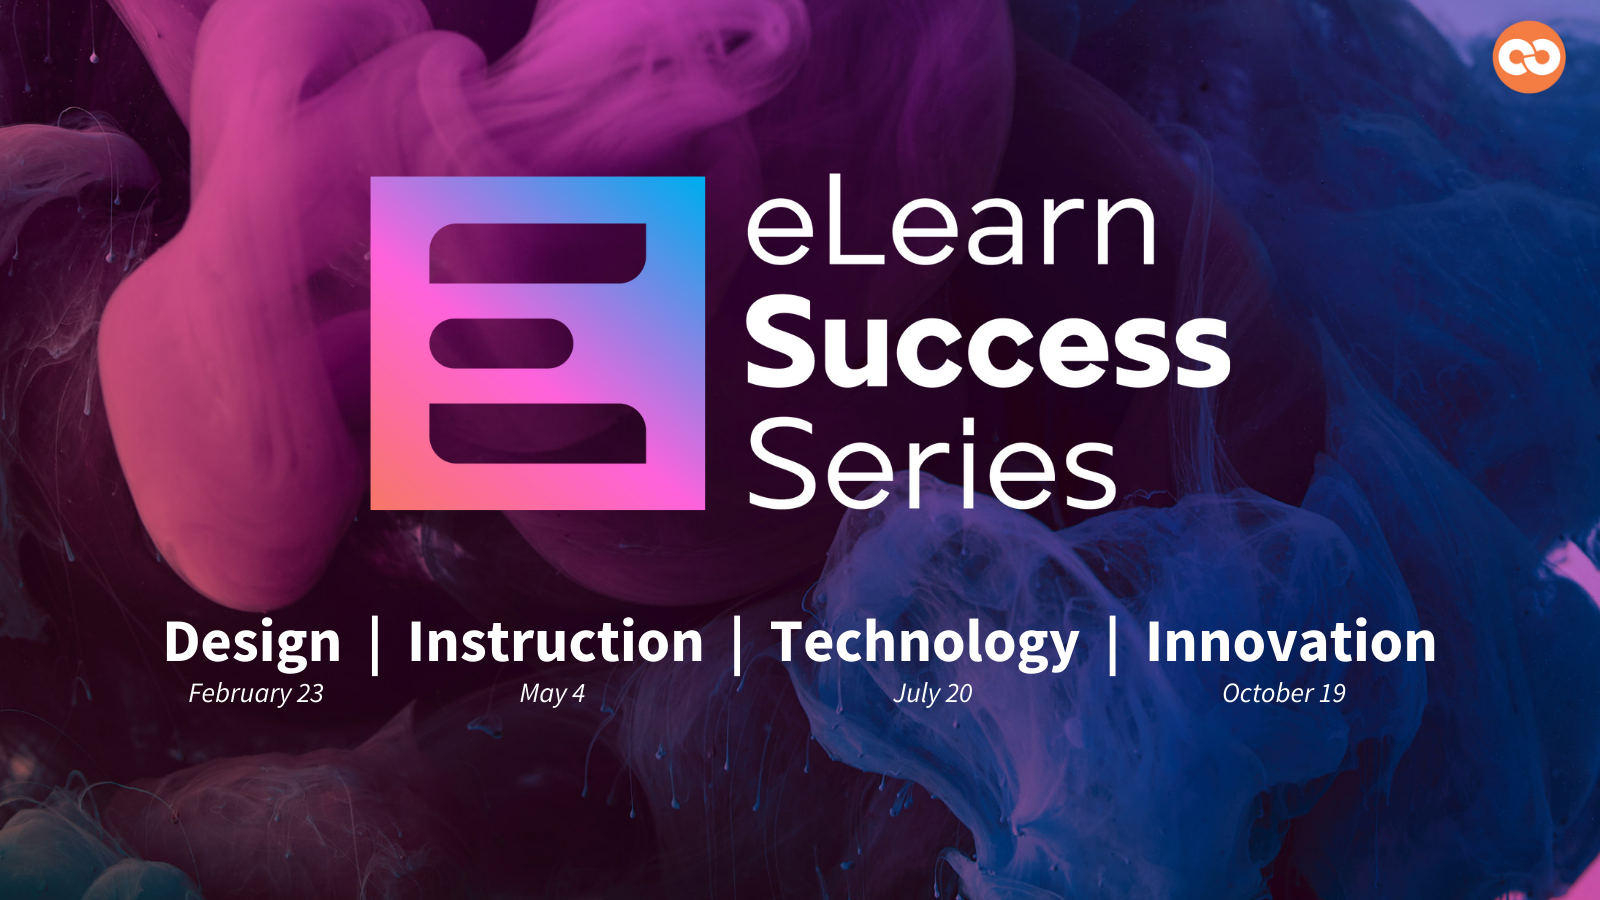 eLearn Success Series